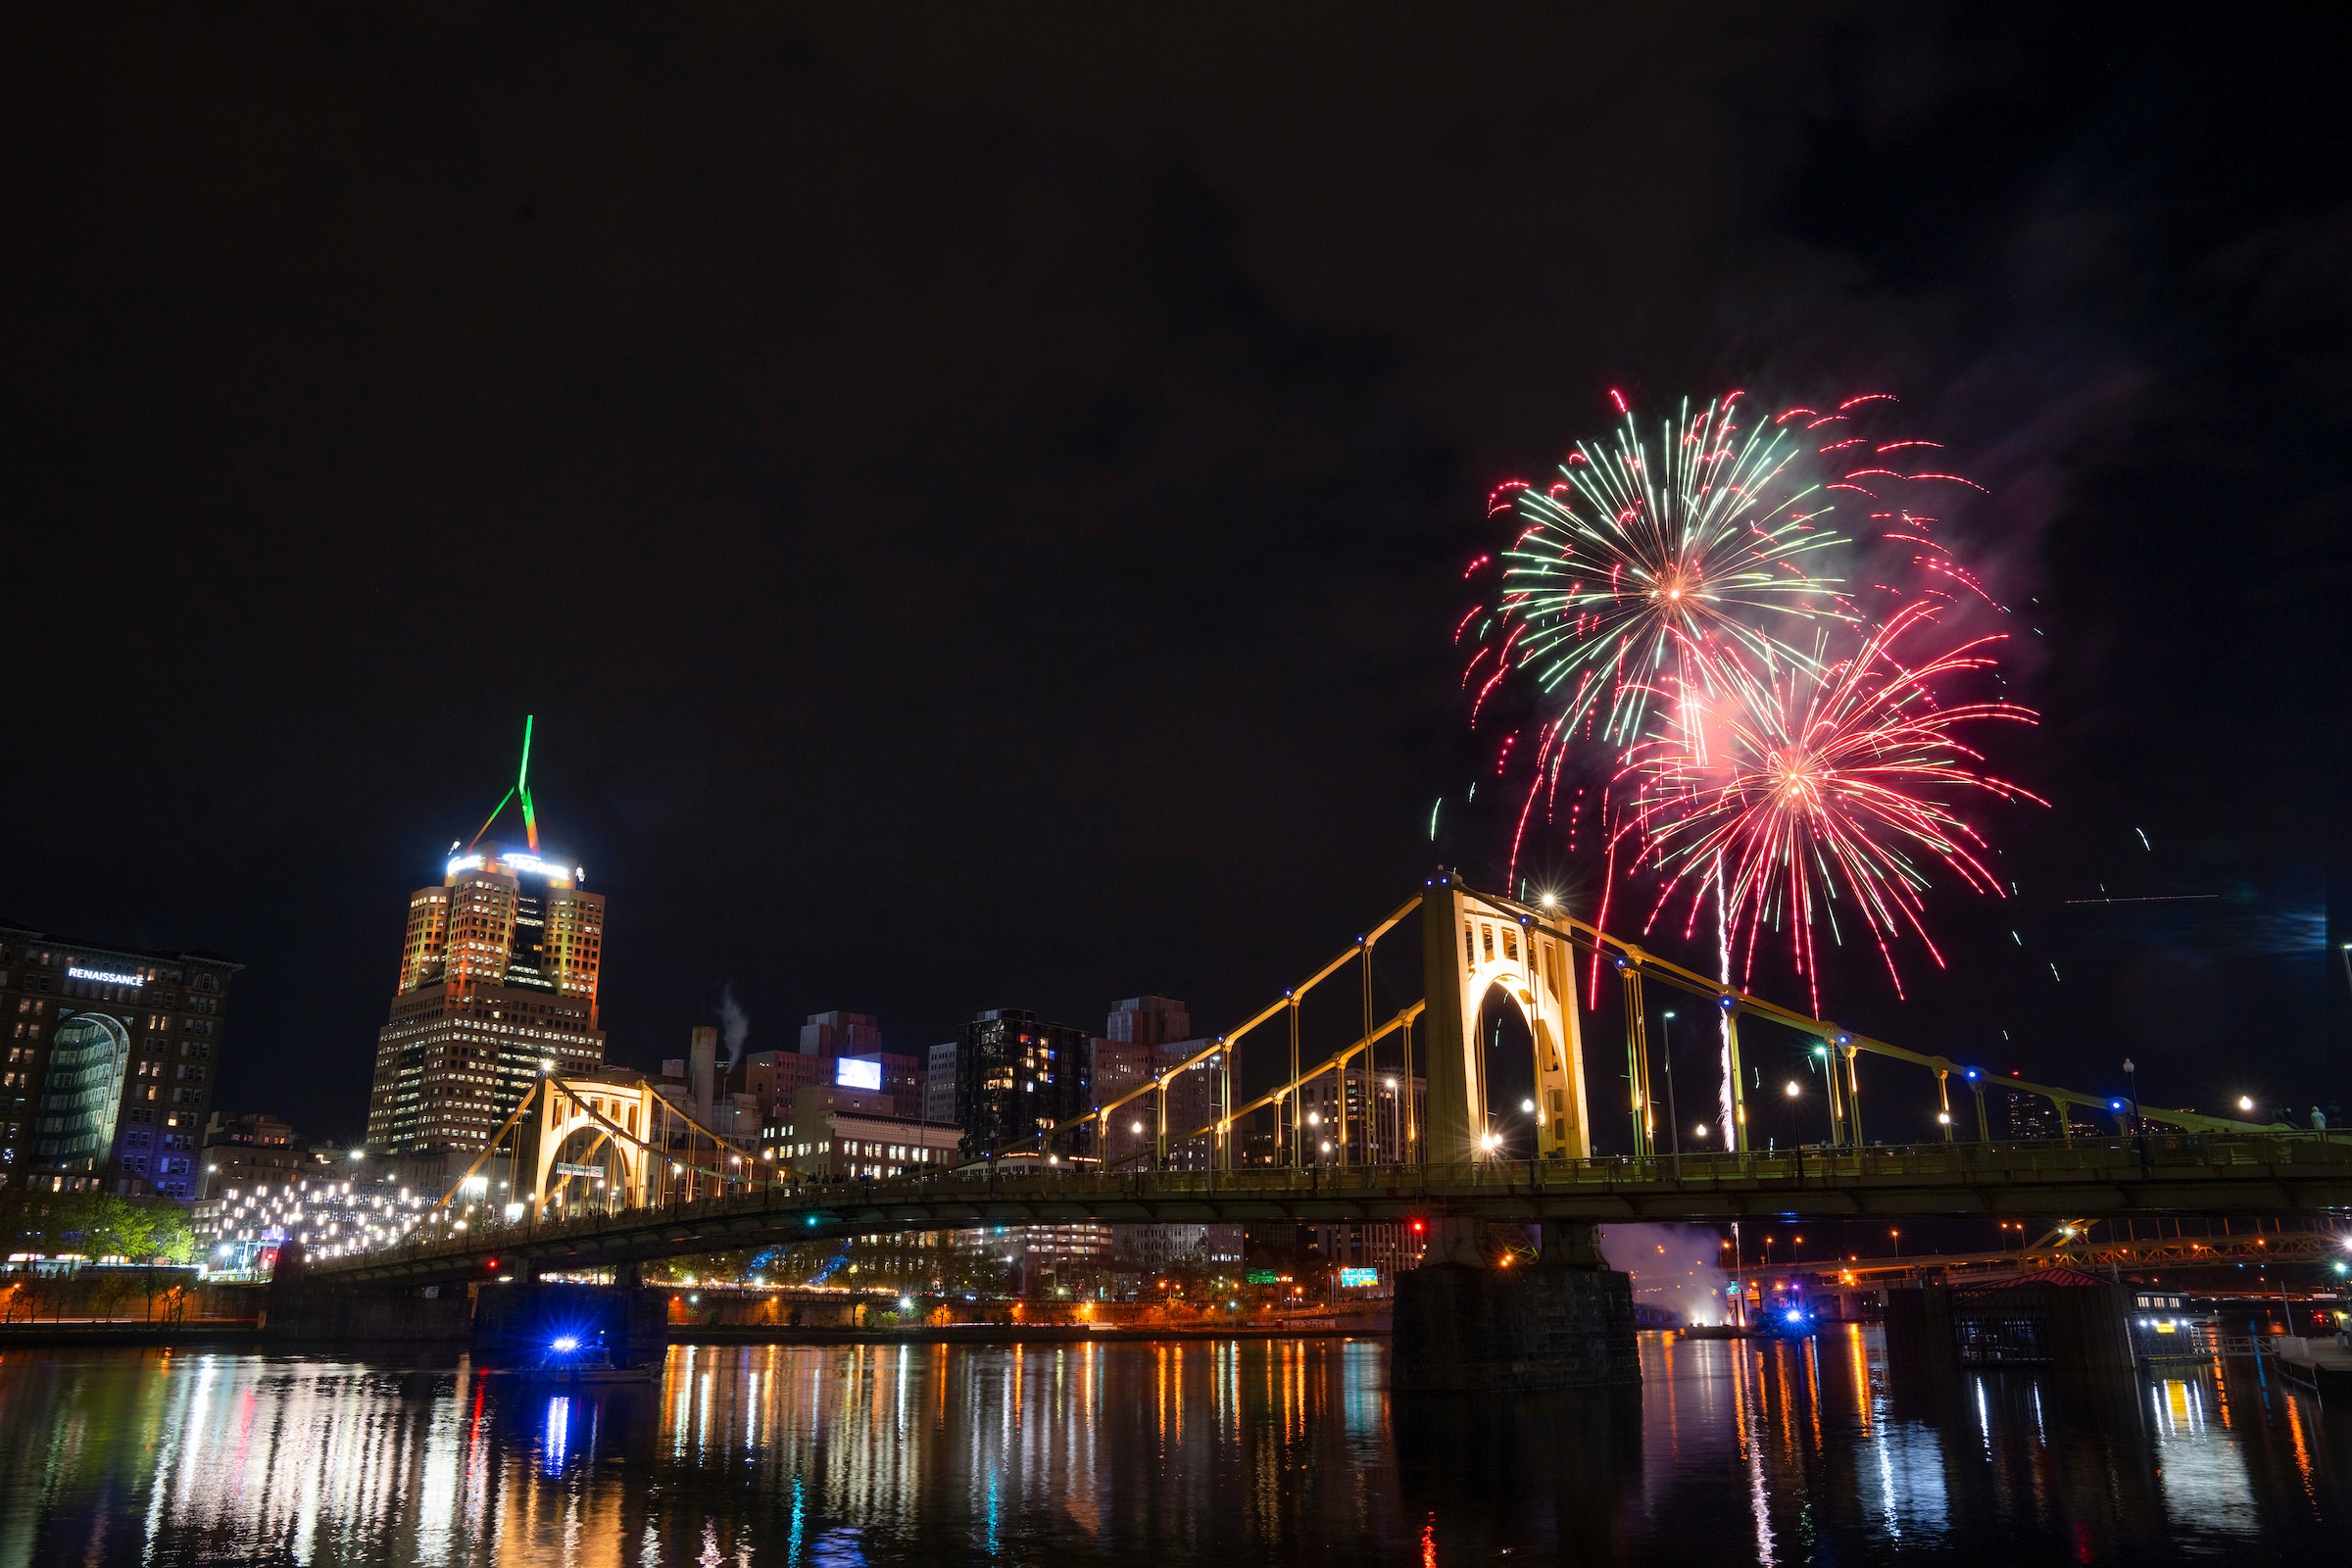 Fireworks explode above a bridge and city skyline